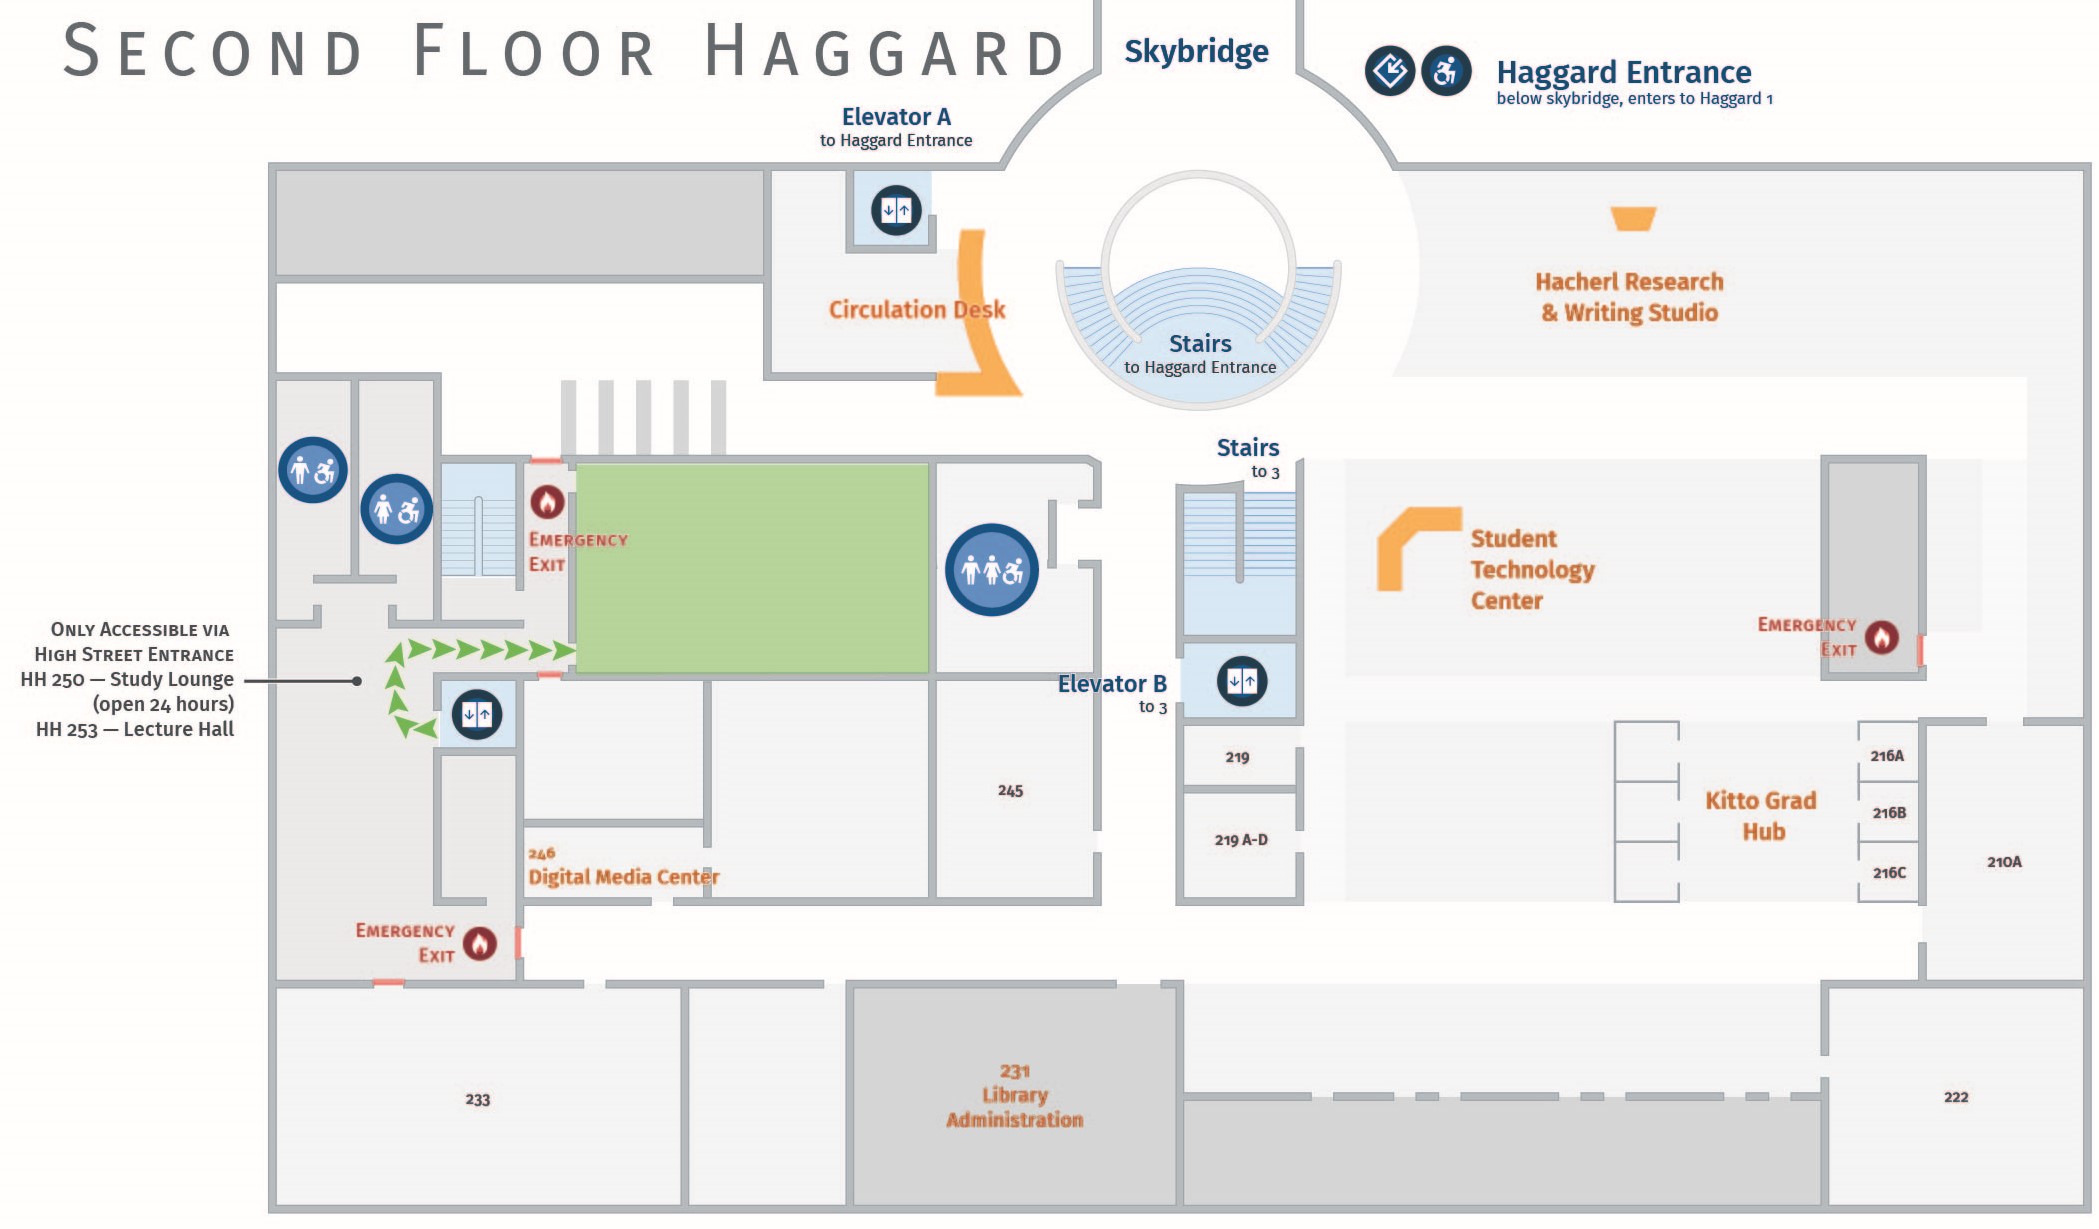 Floor plan, second floor of Haggard with accessible path to Haggard 253.